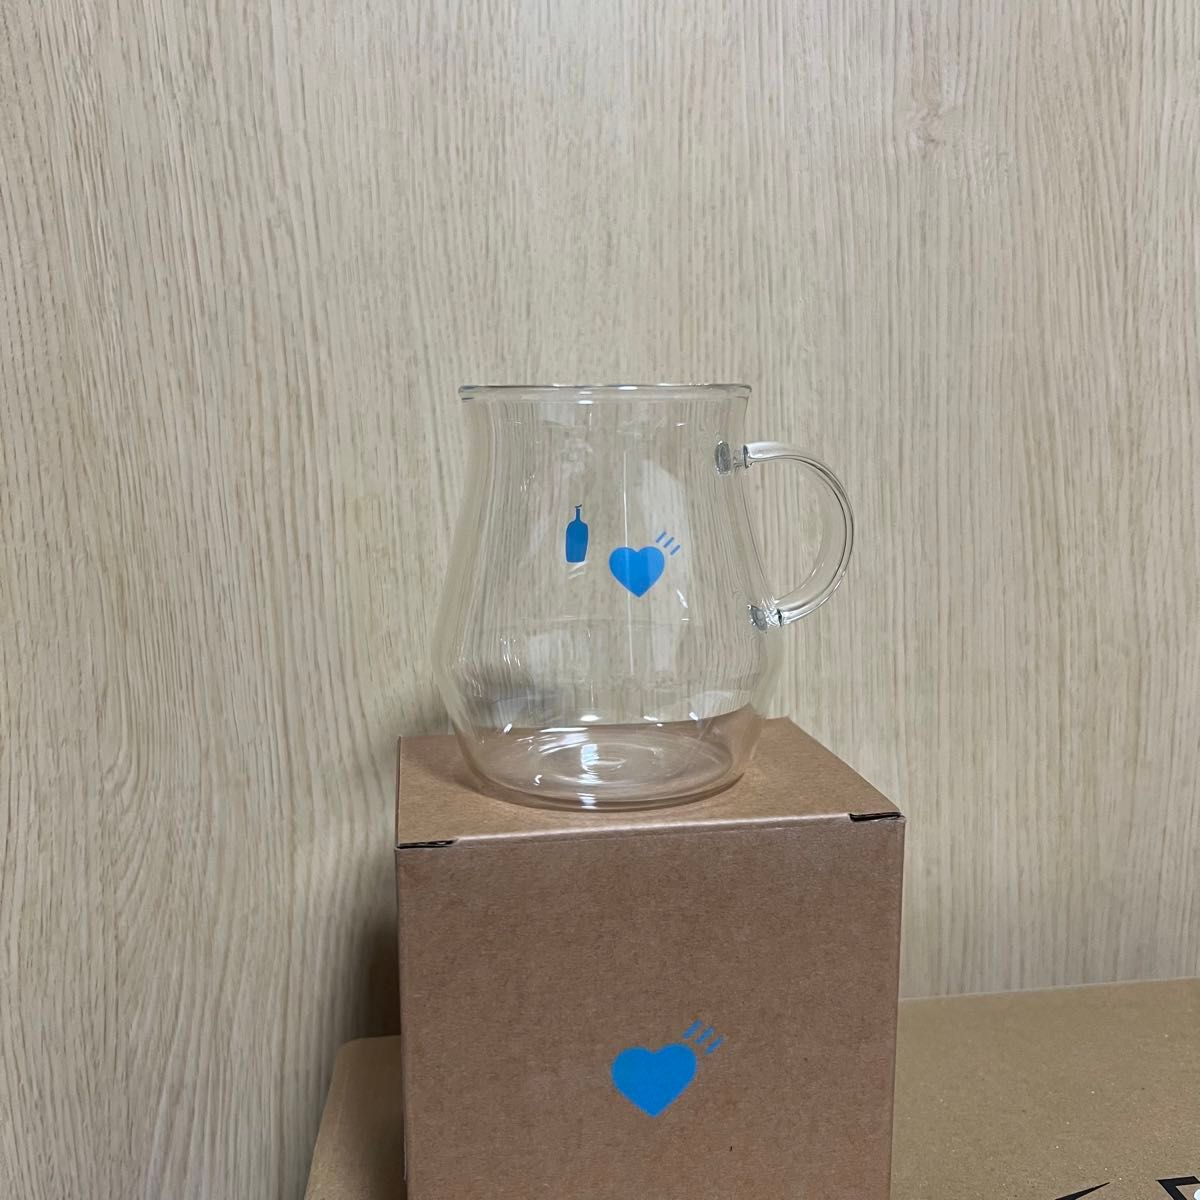 HUMAN MADE Blue Bottle Coffee Glass Mug コップ クリア iwaki マグカップ イワキ